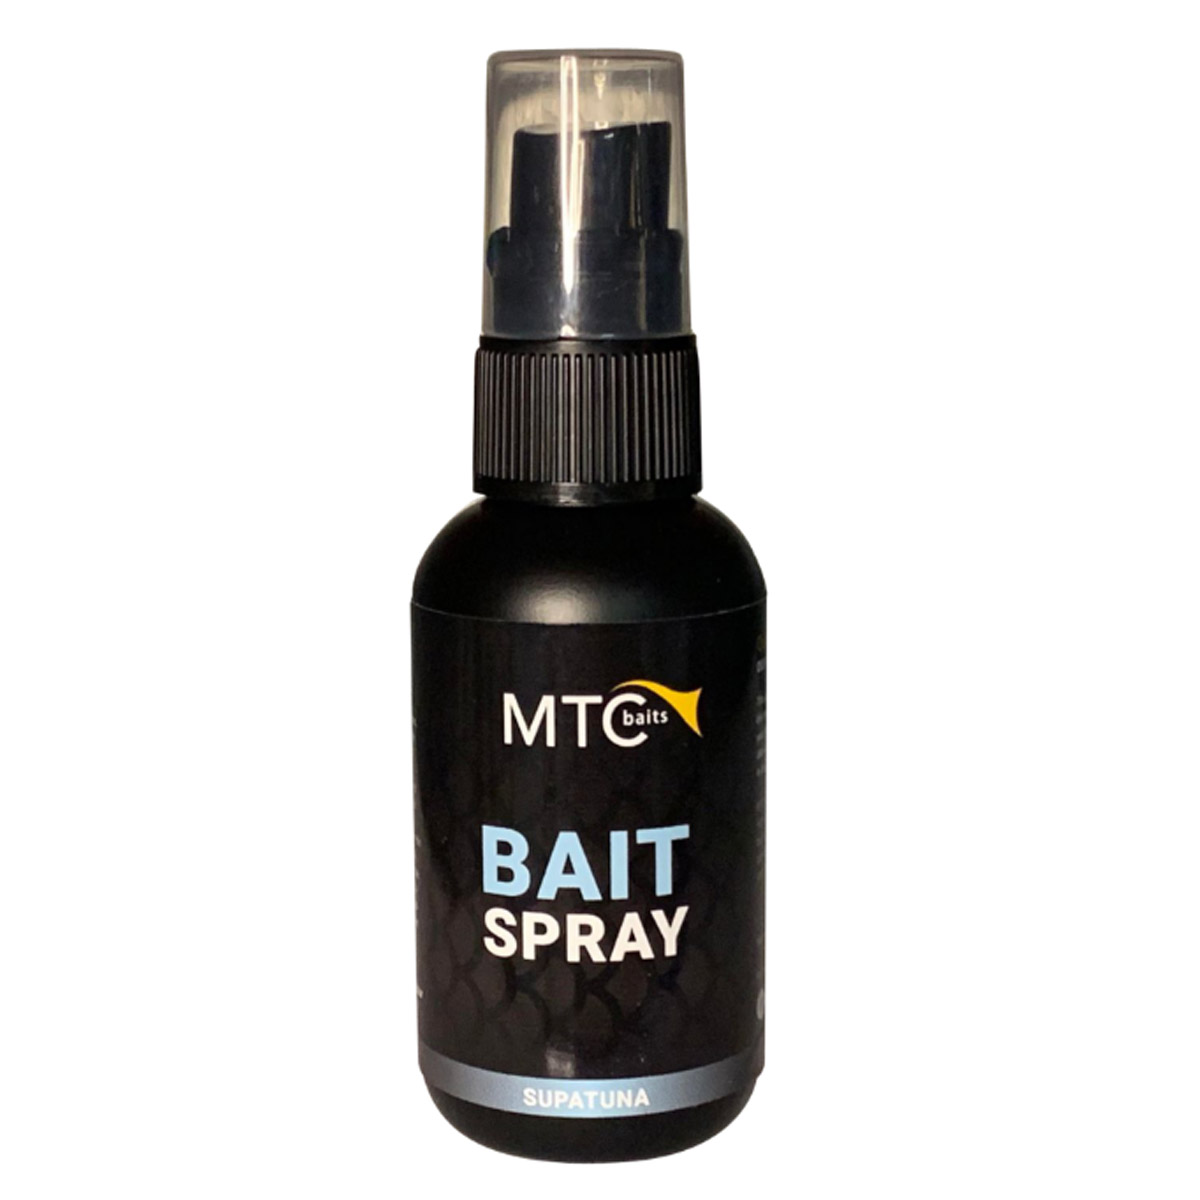 MTC Baits Bait Spray SupaTuna